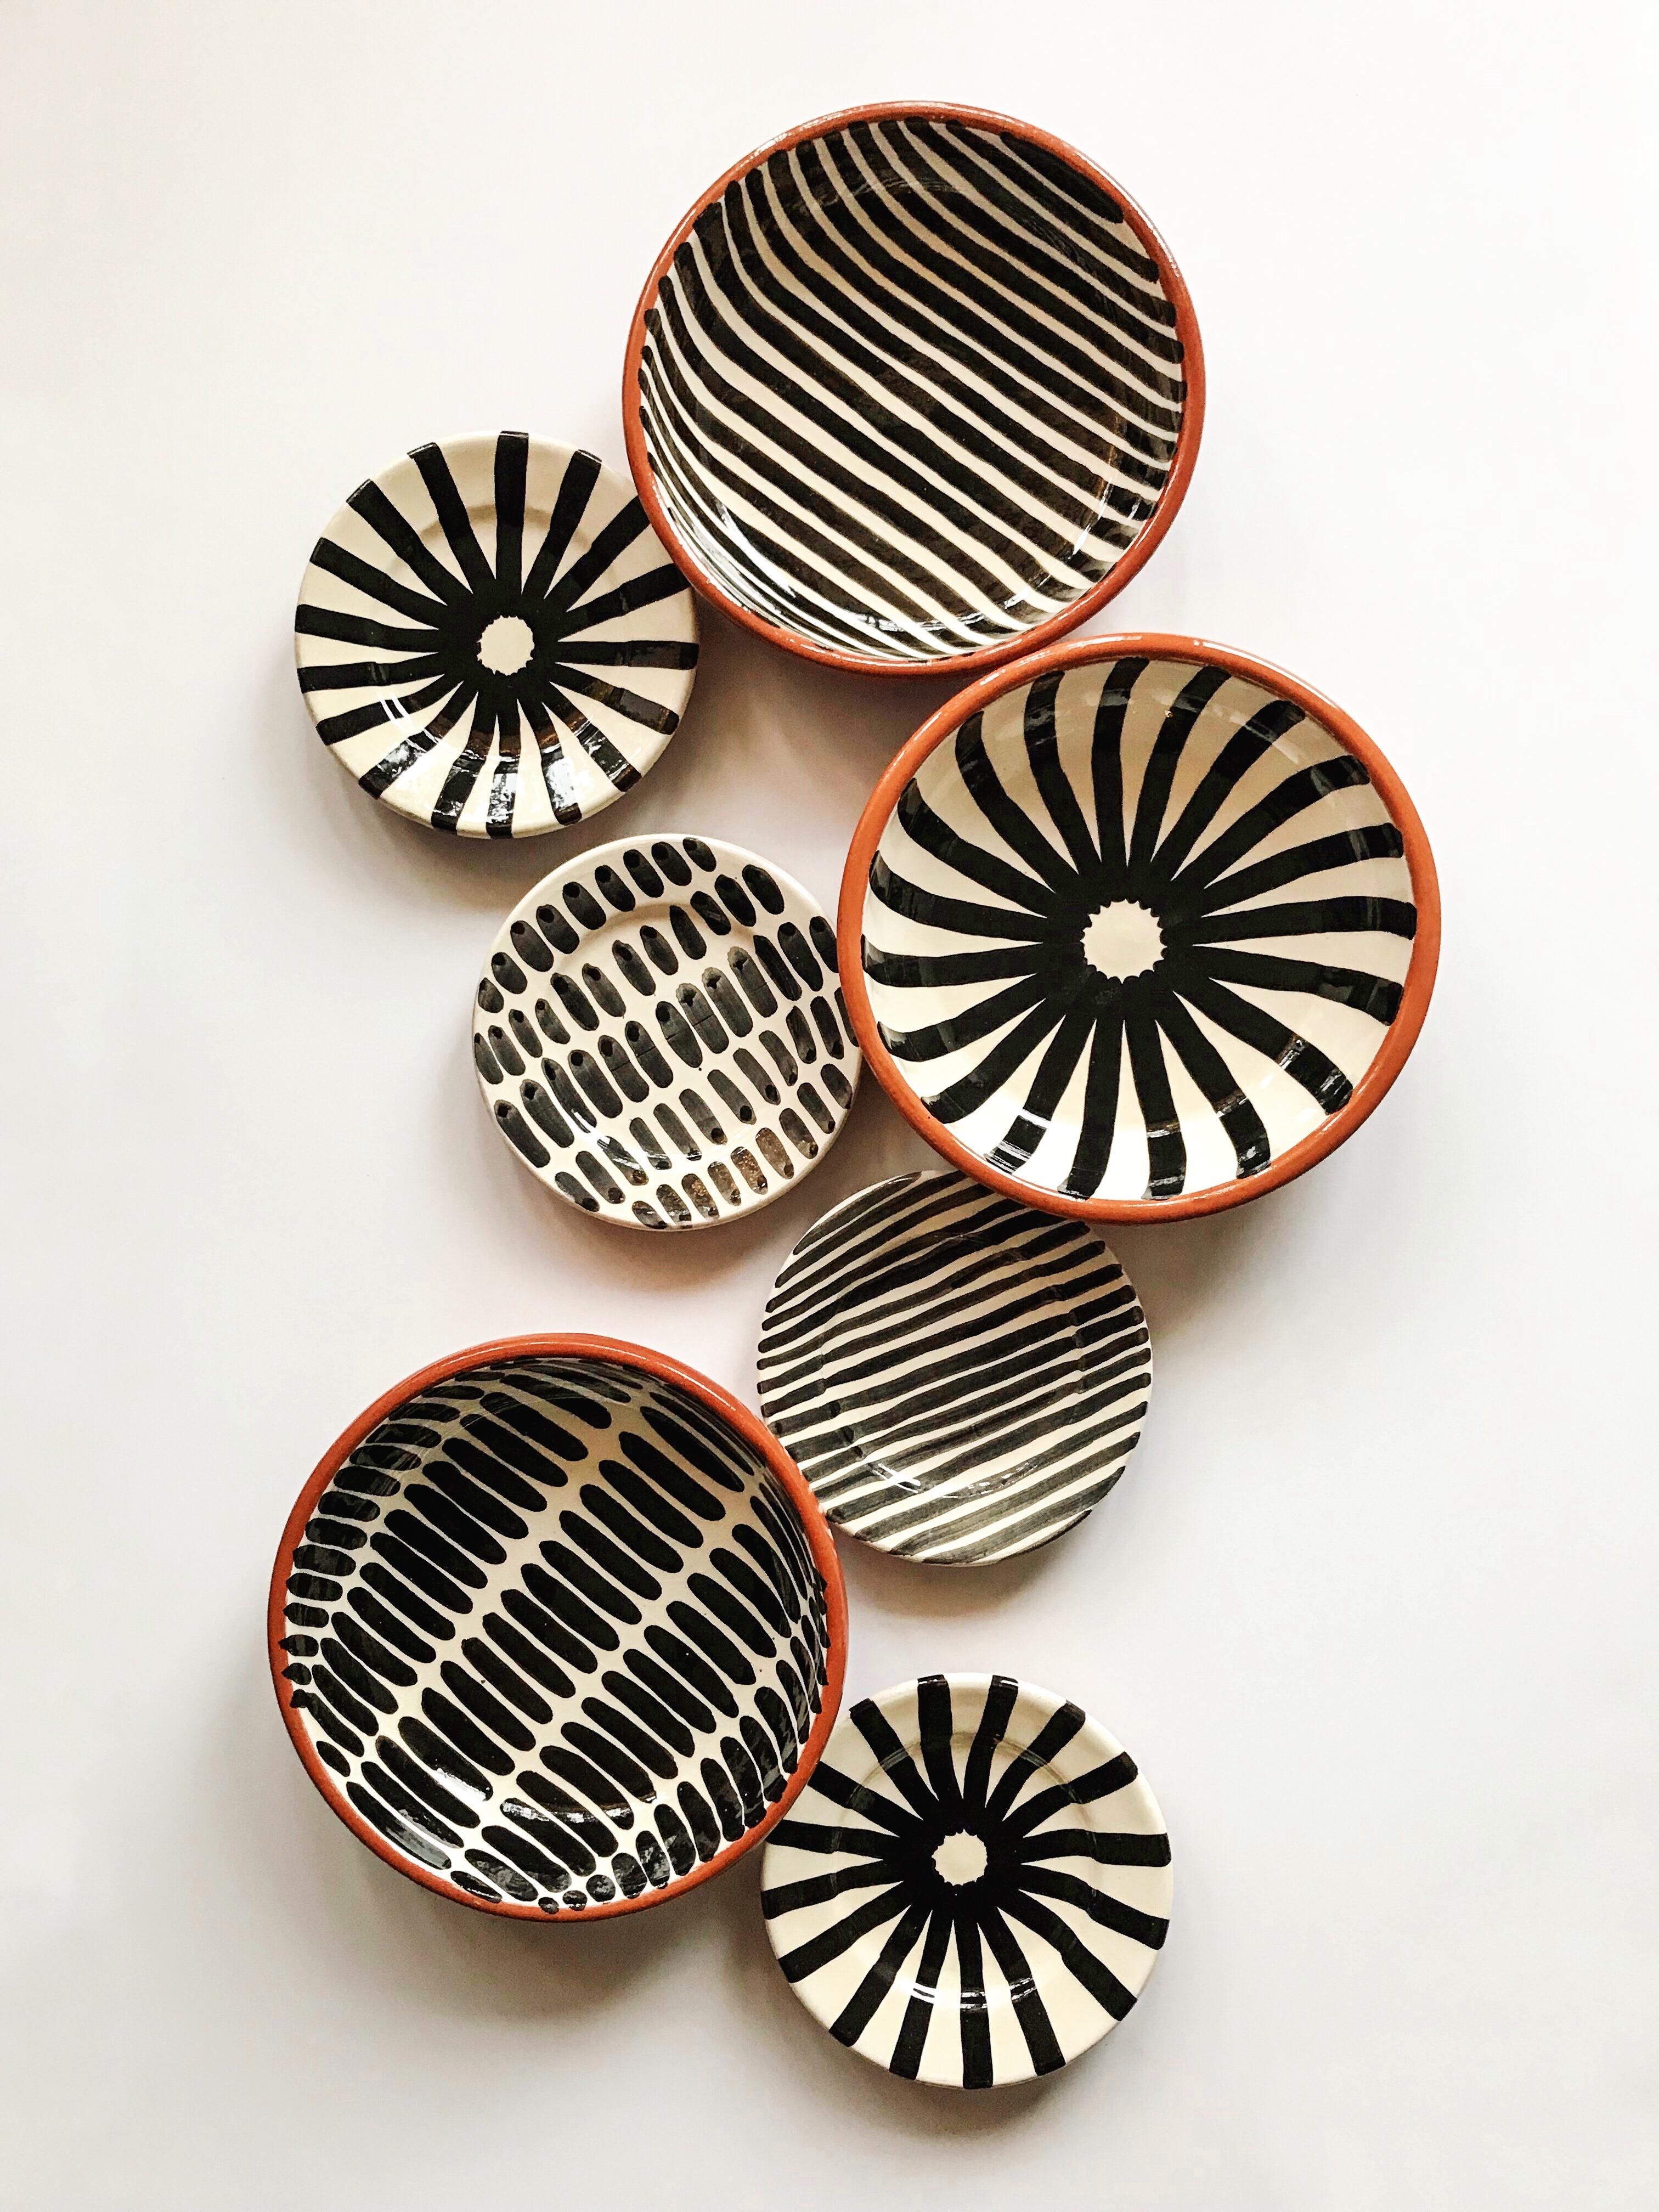 Rustic Handmade Ceramic Black and White Dash Pattern Mini Bowl, in Stock For Sale